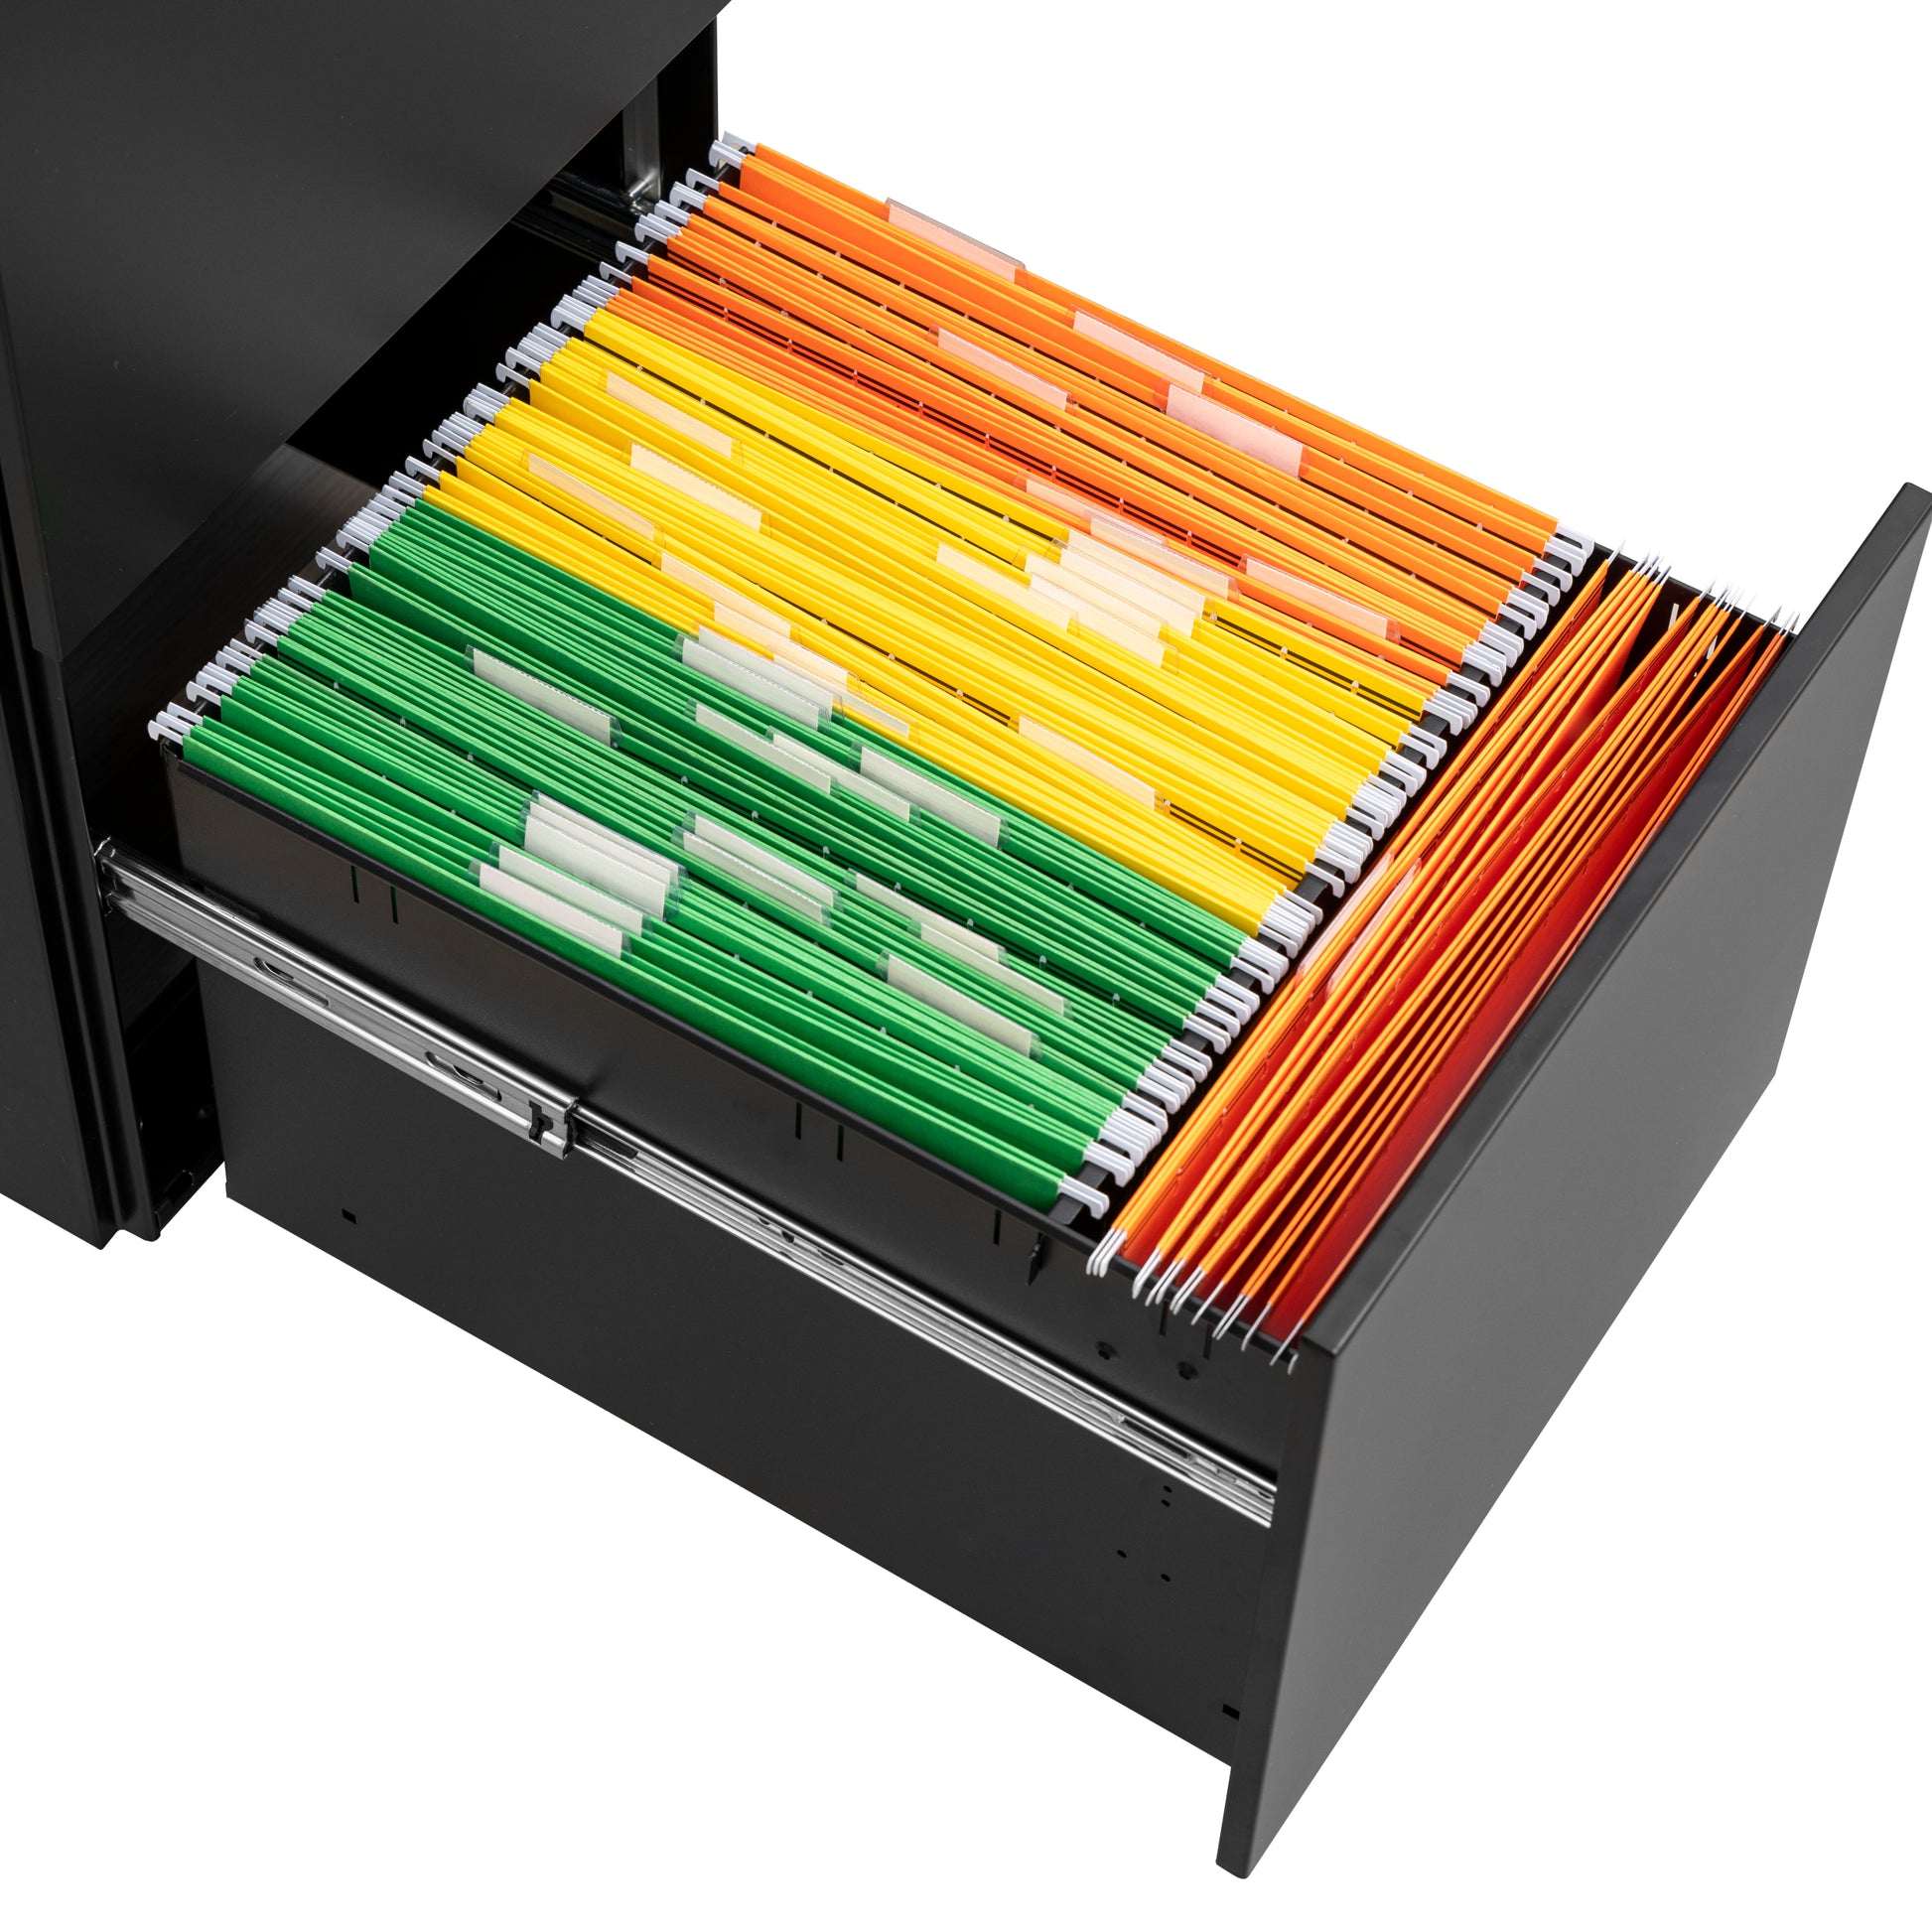 2 Drawer File Cabinet with Lock, Steel Mobile Filing black-steel